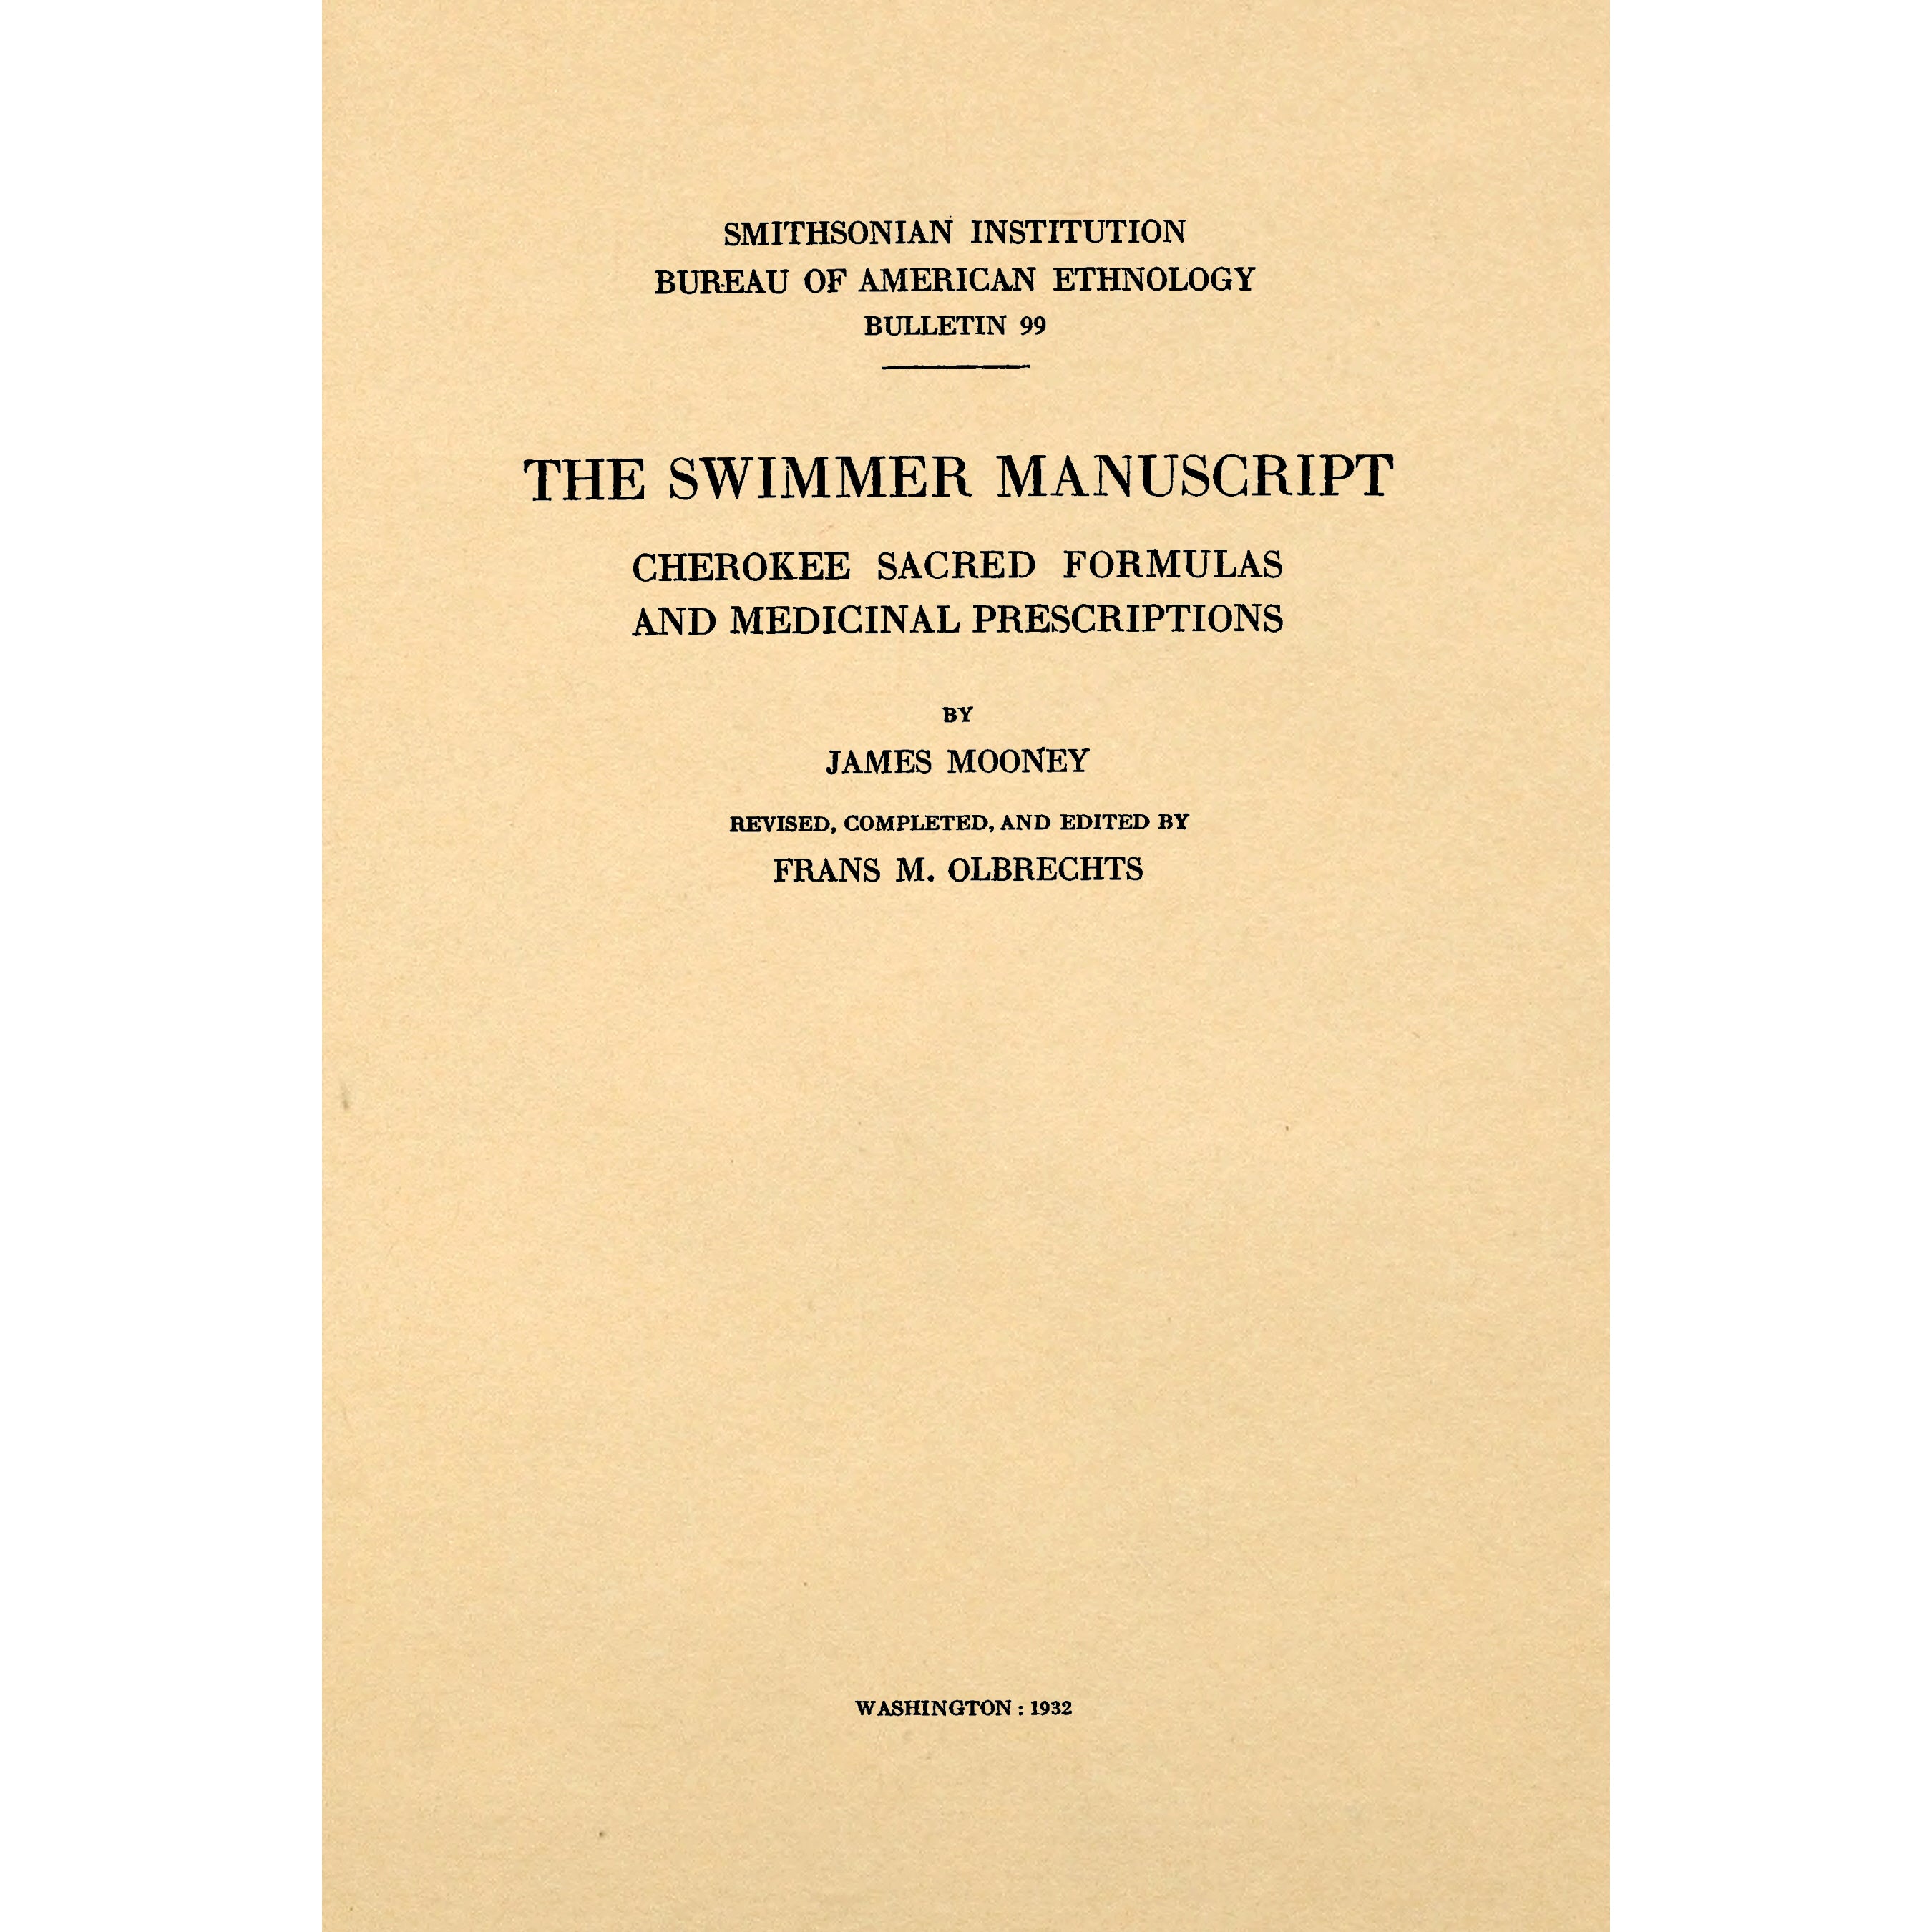 The Swimmer manuscript : Cherokee sacred formulas and medicinal prescriptions